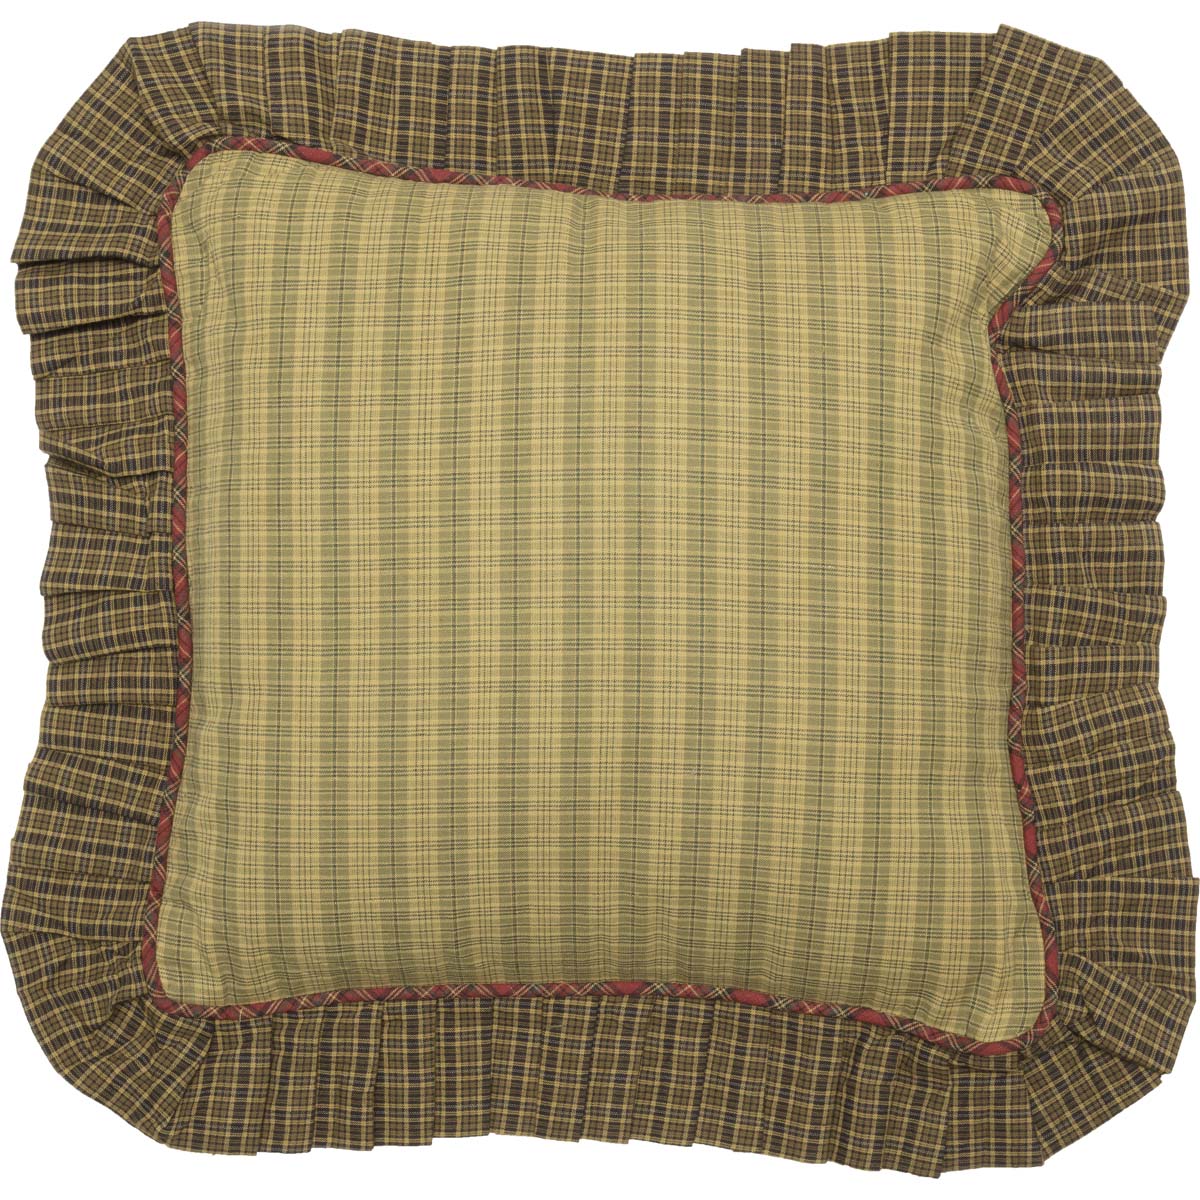 Tea Cabin Fabric Ruffled Pillow 16x16